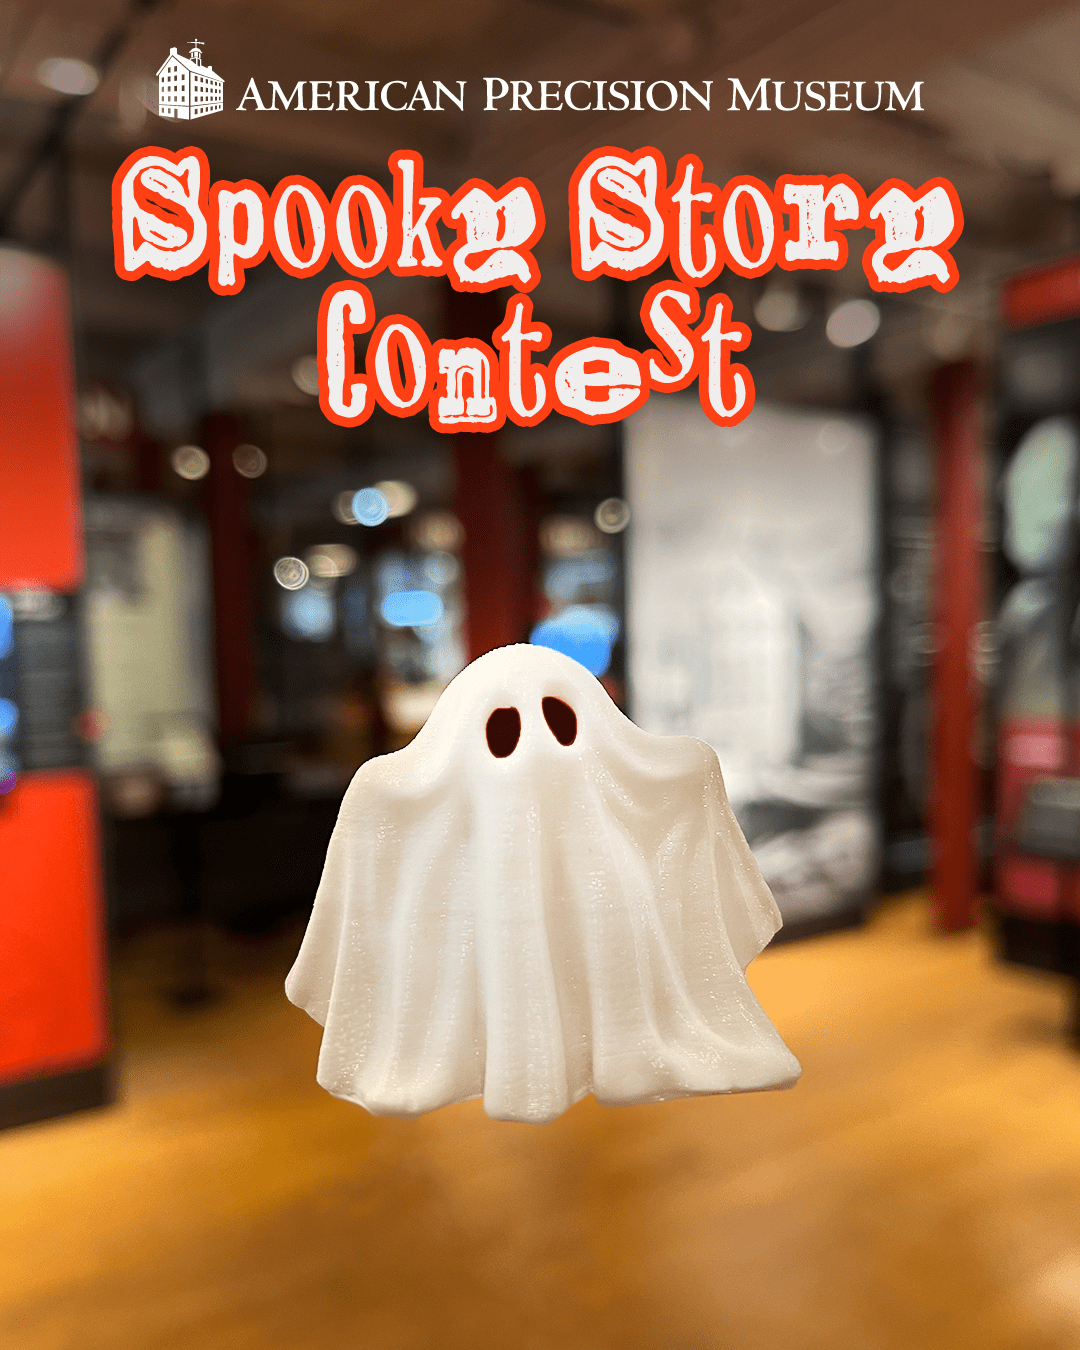 Spooky Story Contest Winners